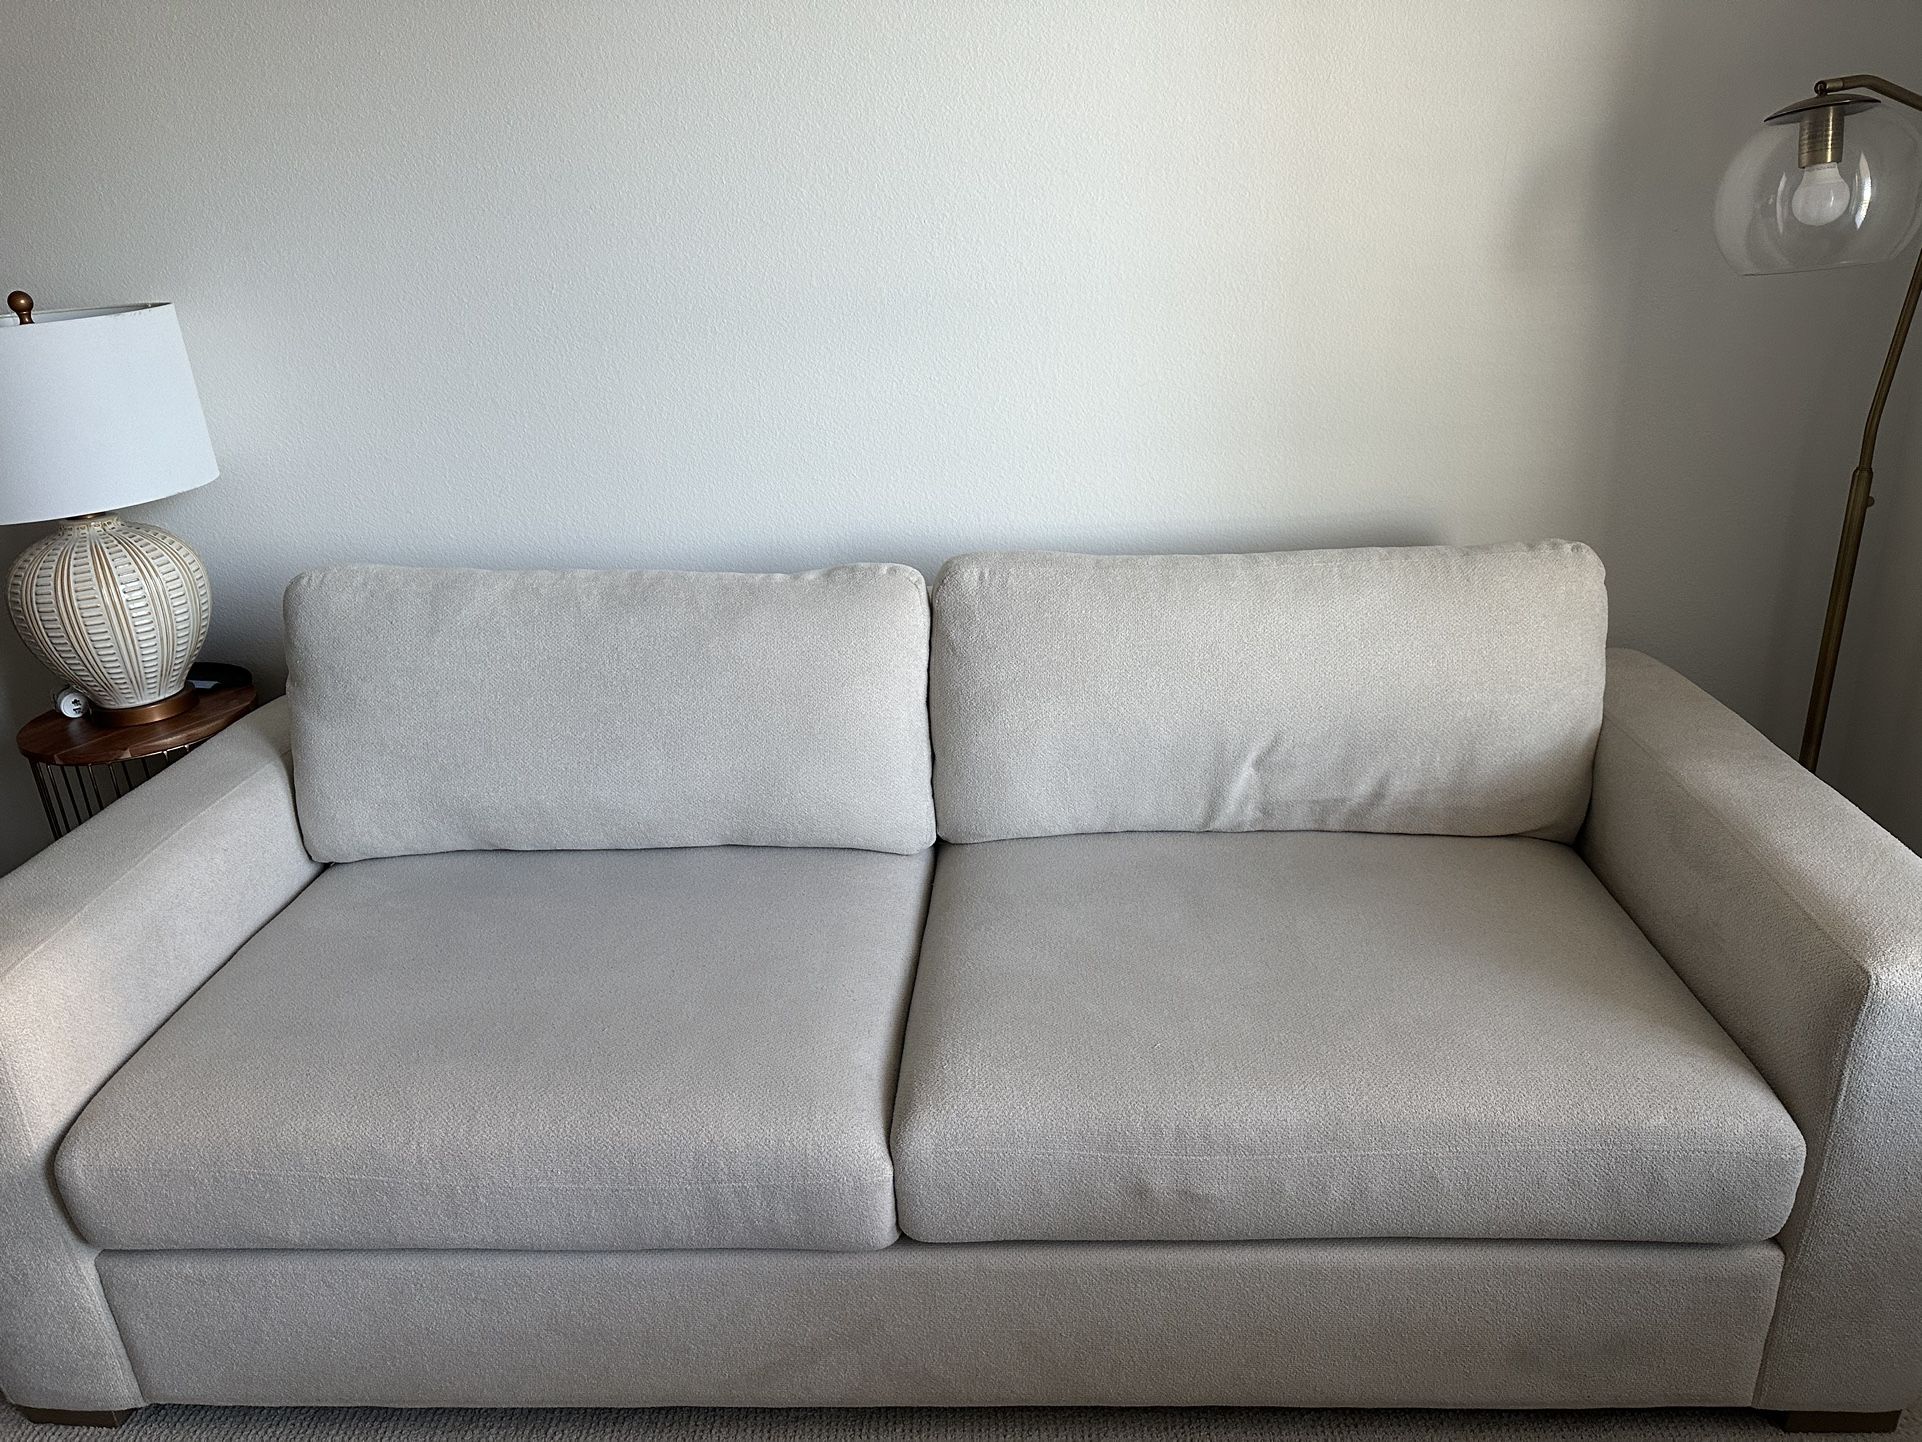 Light Cream/off White Couch